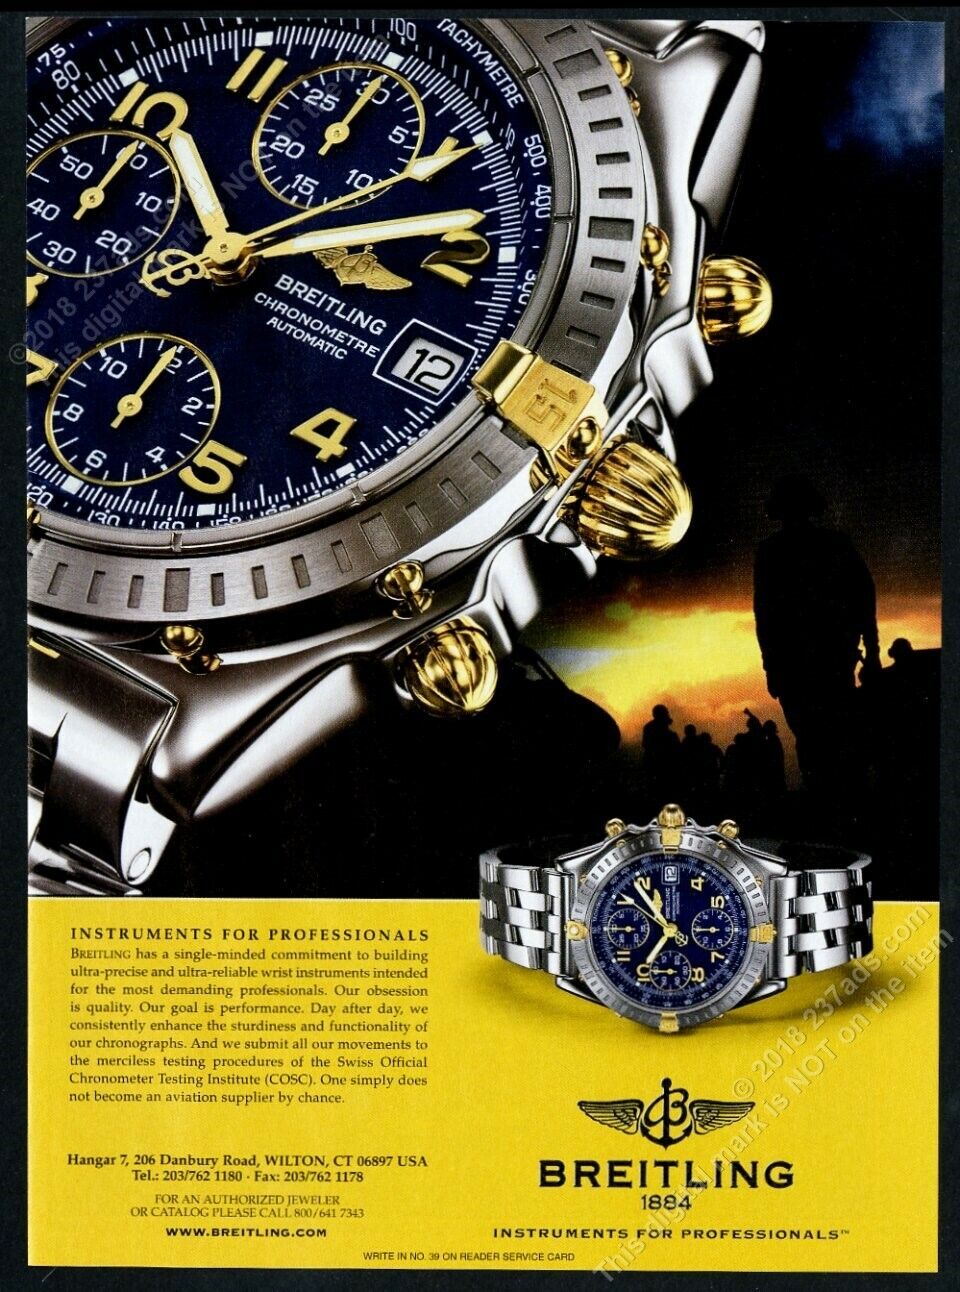 2002 Breitling Chronometre Aerospace watch photo vintage print ad